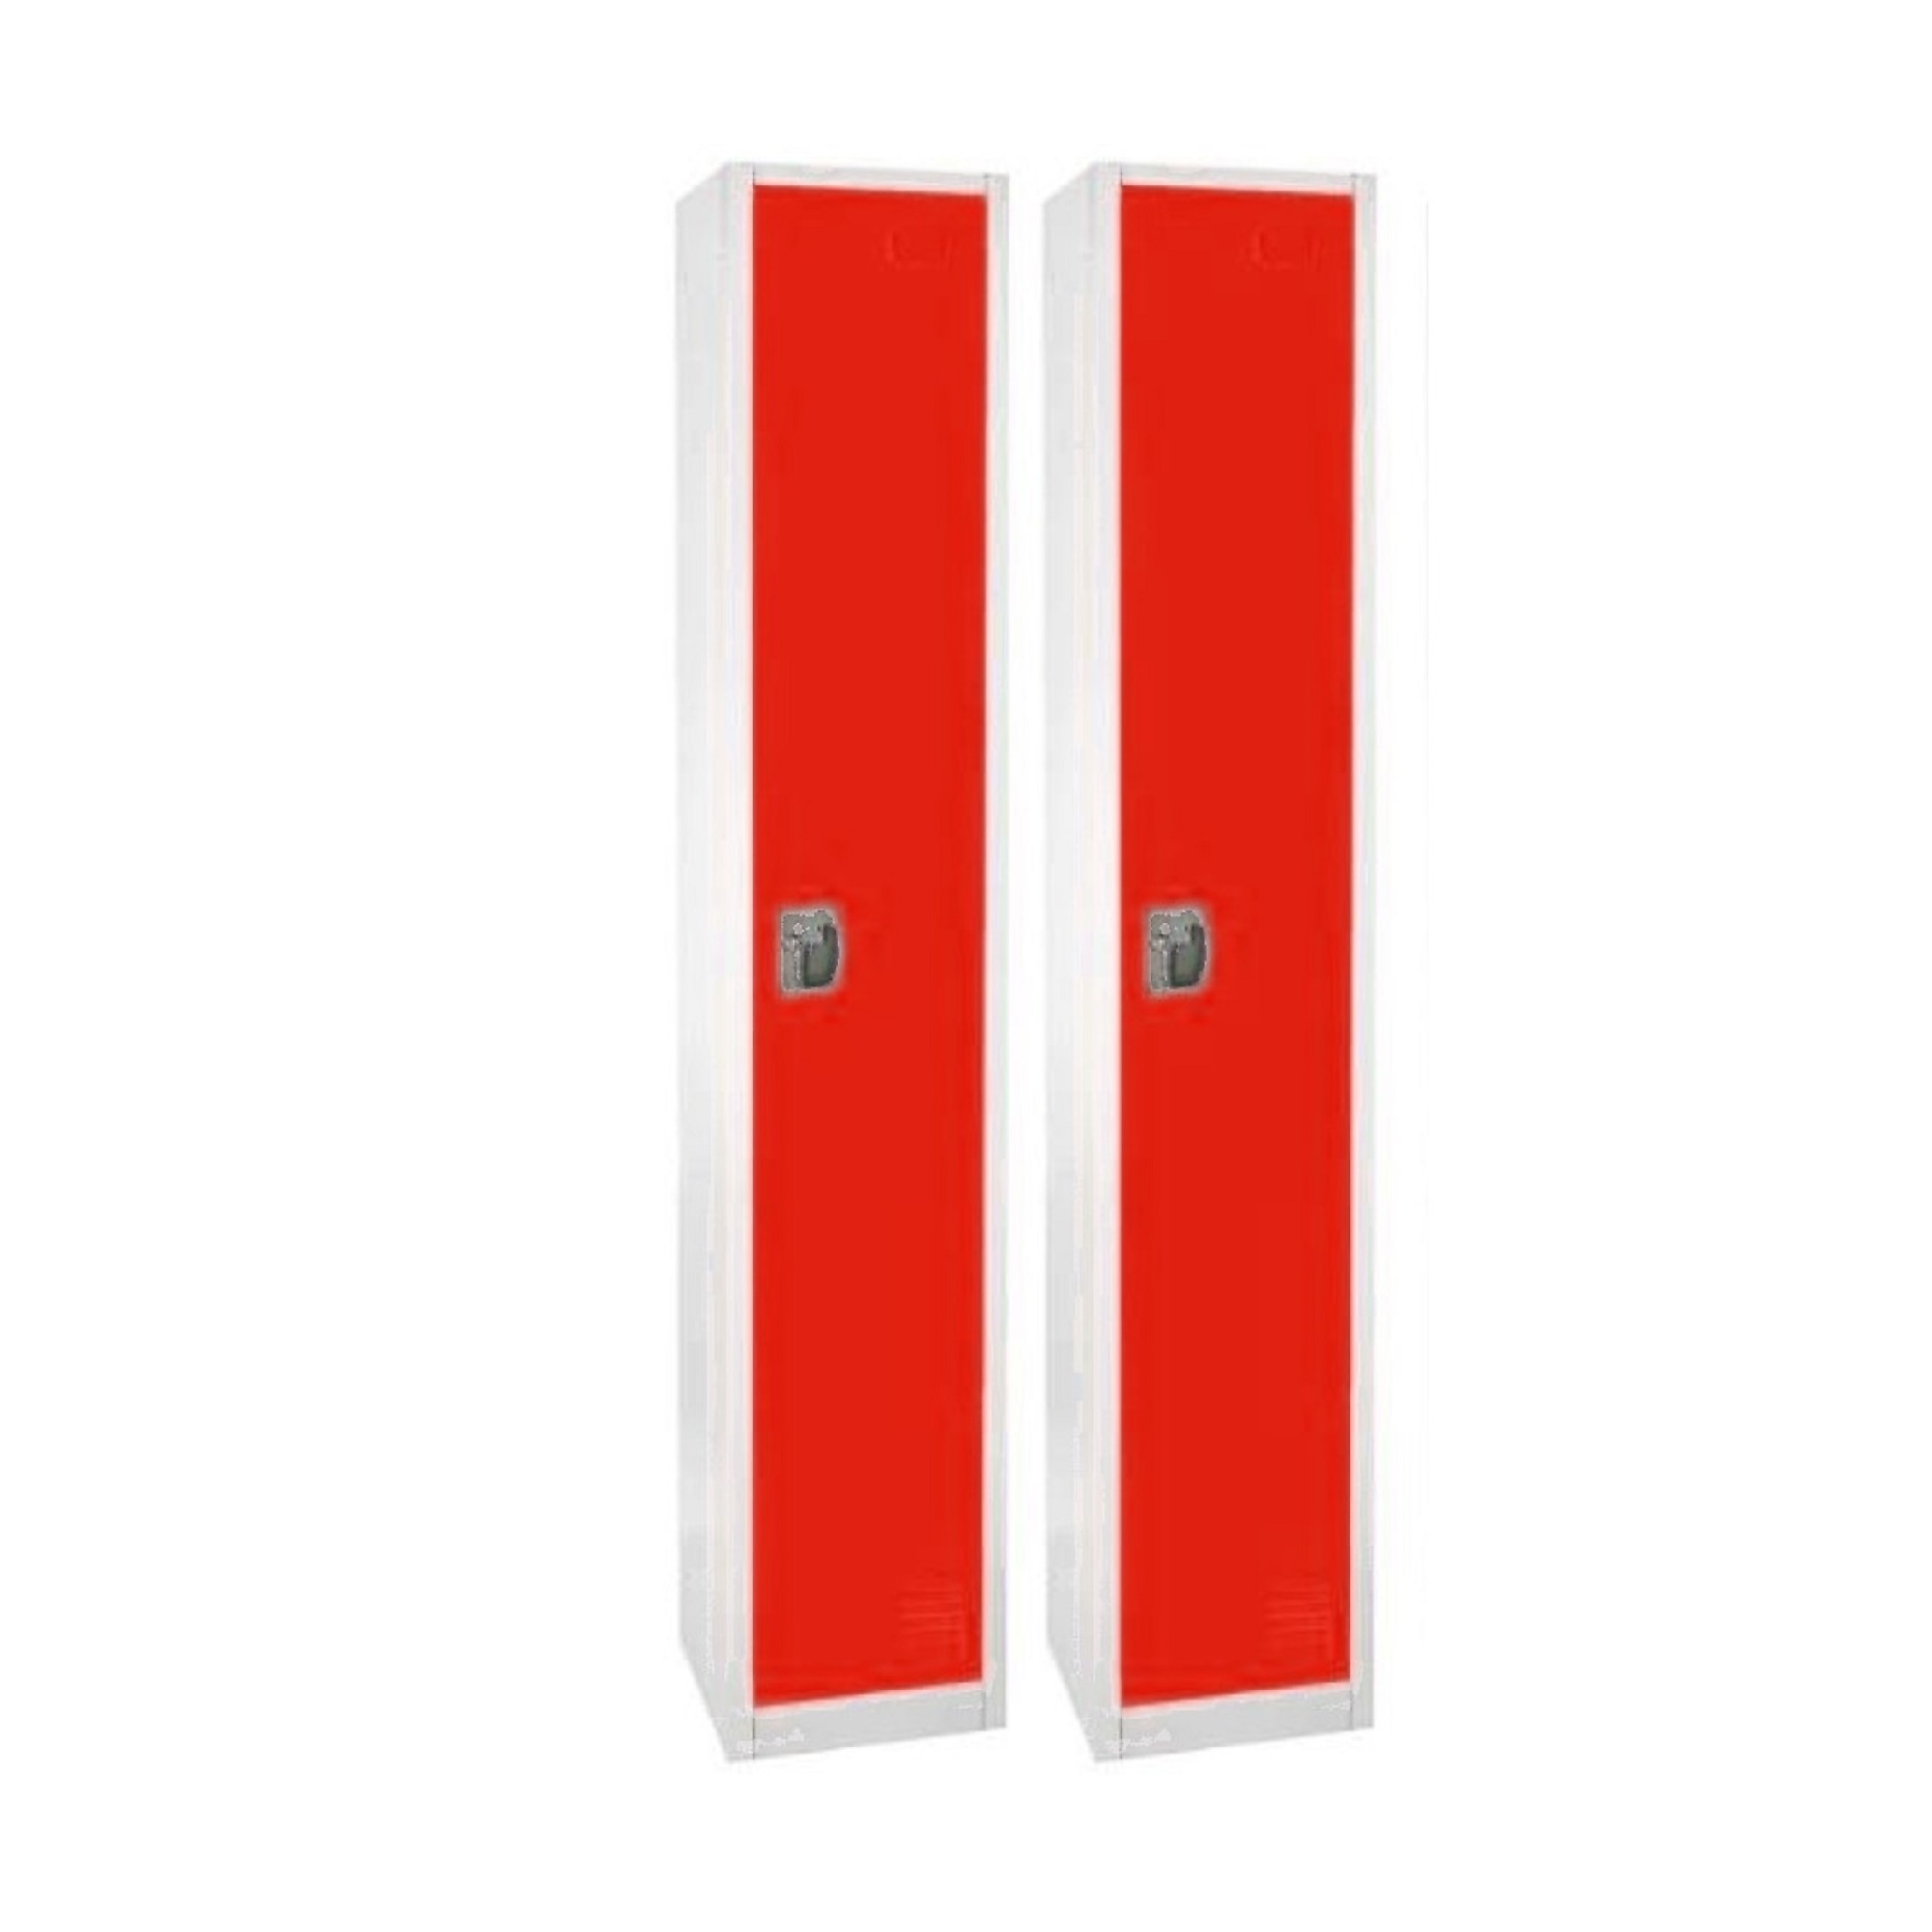 Alpine, 72Inch H 1-Tier Steel Storage Locker, Red, 2-Pack, Height 72 in, Width 12 in, Color Red, Model ADI629-201-RED-2PK